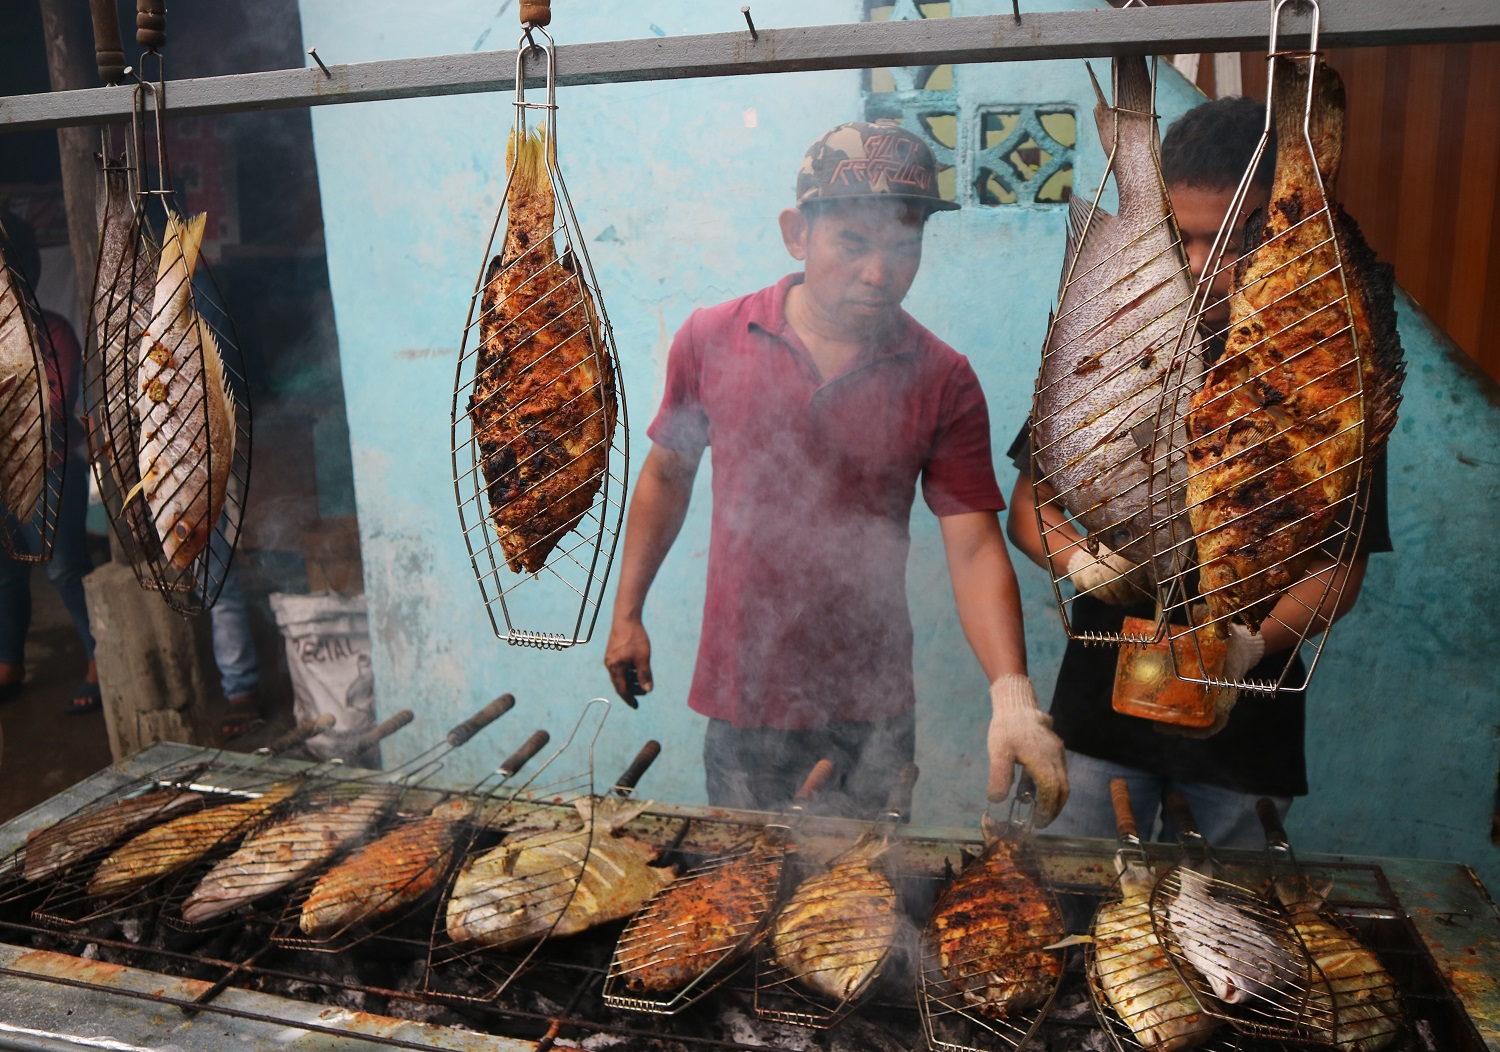 Pedagang ikan bakar di Pasar Ramadan Tanjung Uma, Batam. | Dokumentasi Pribadi